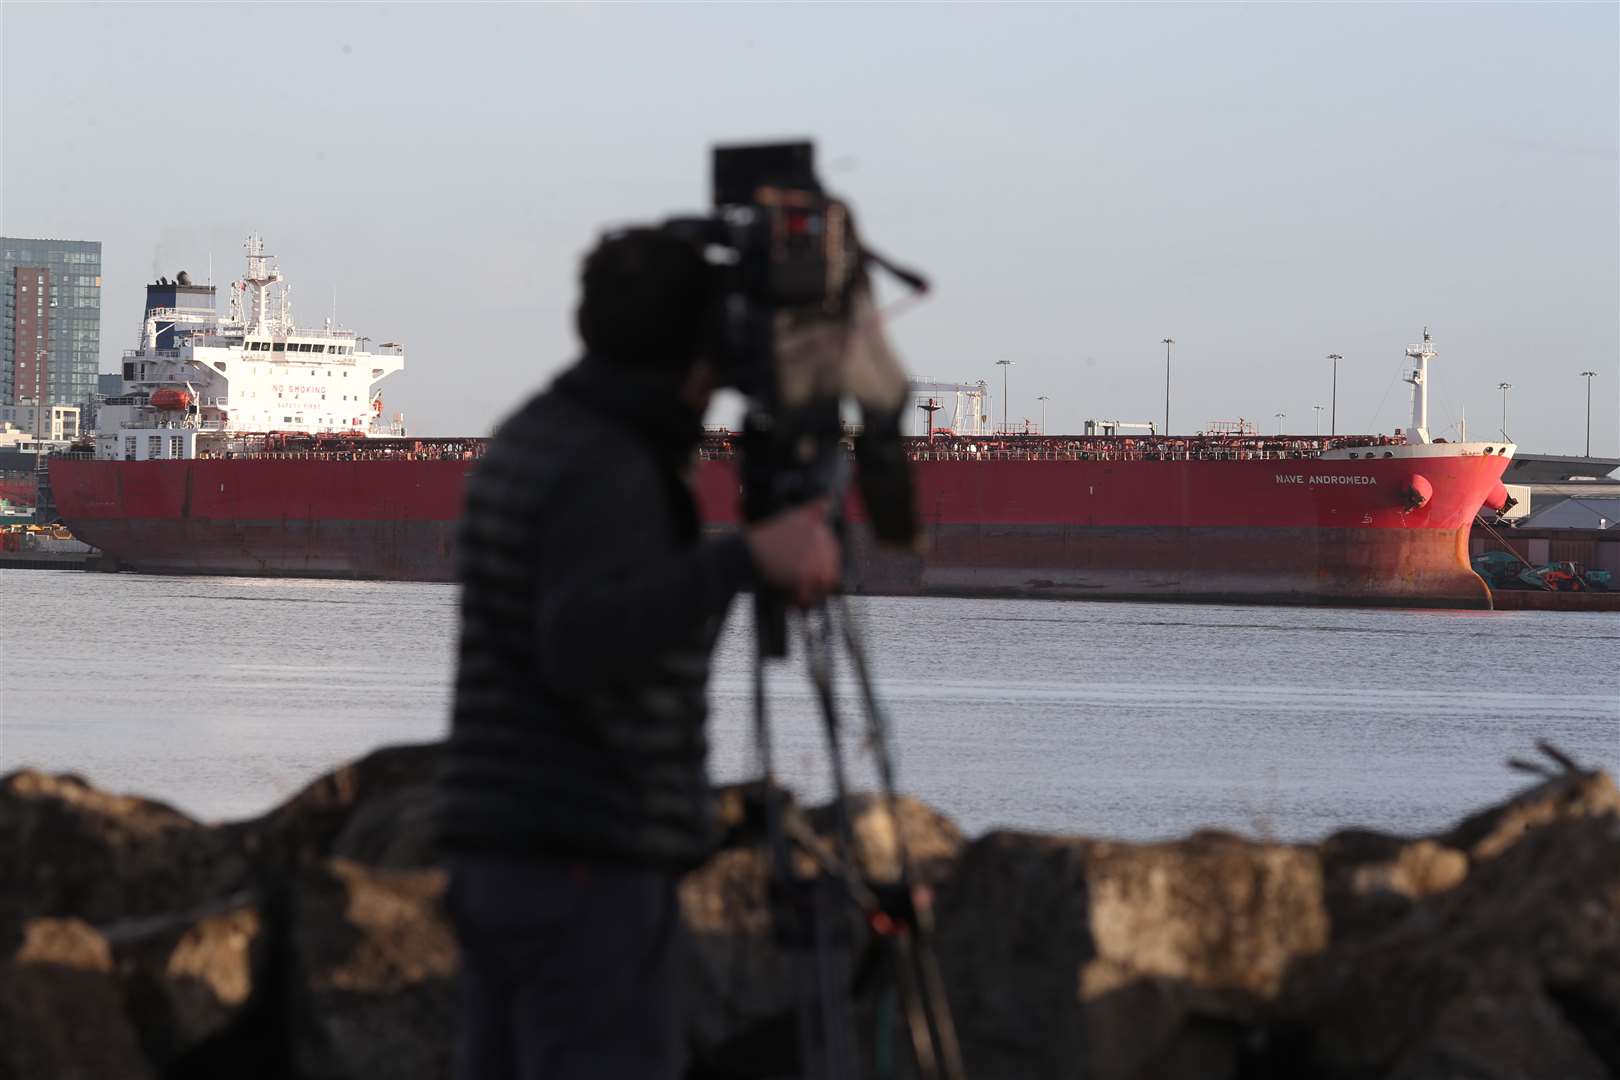 A cameraman films the Nave Andromeda oil tanker in Southampton (Andrew Matthews/PA)